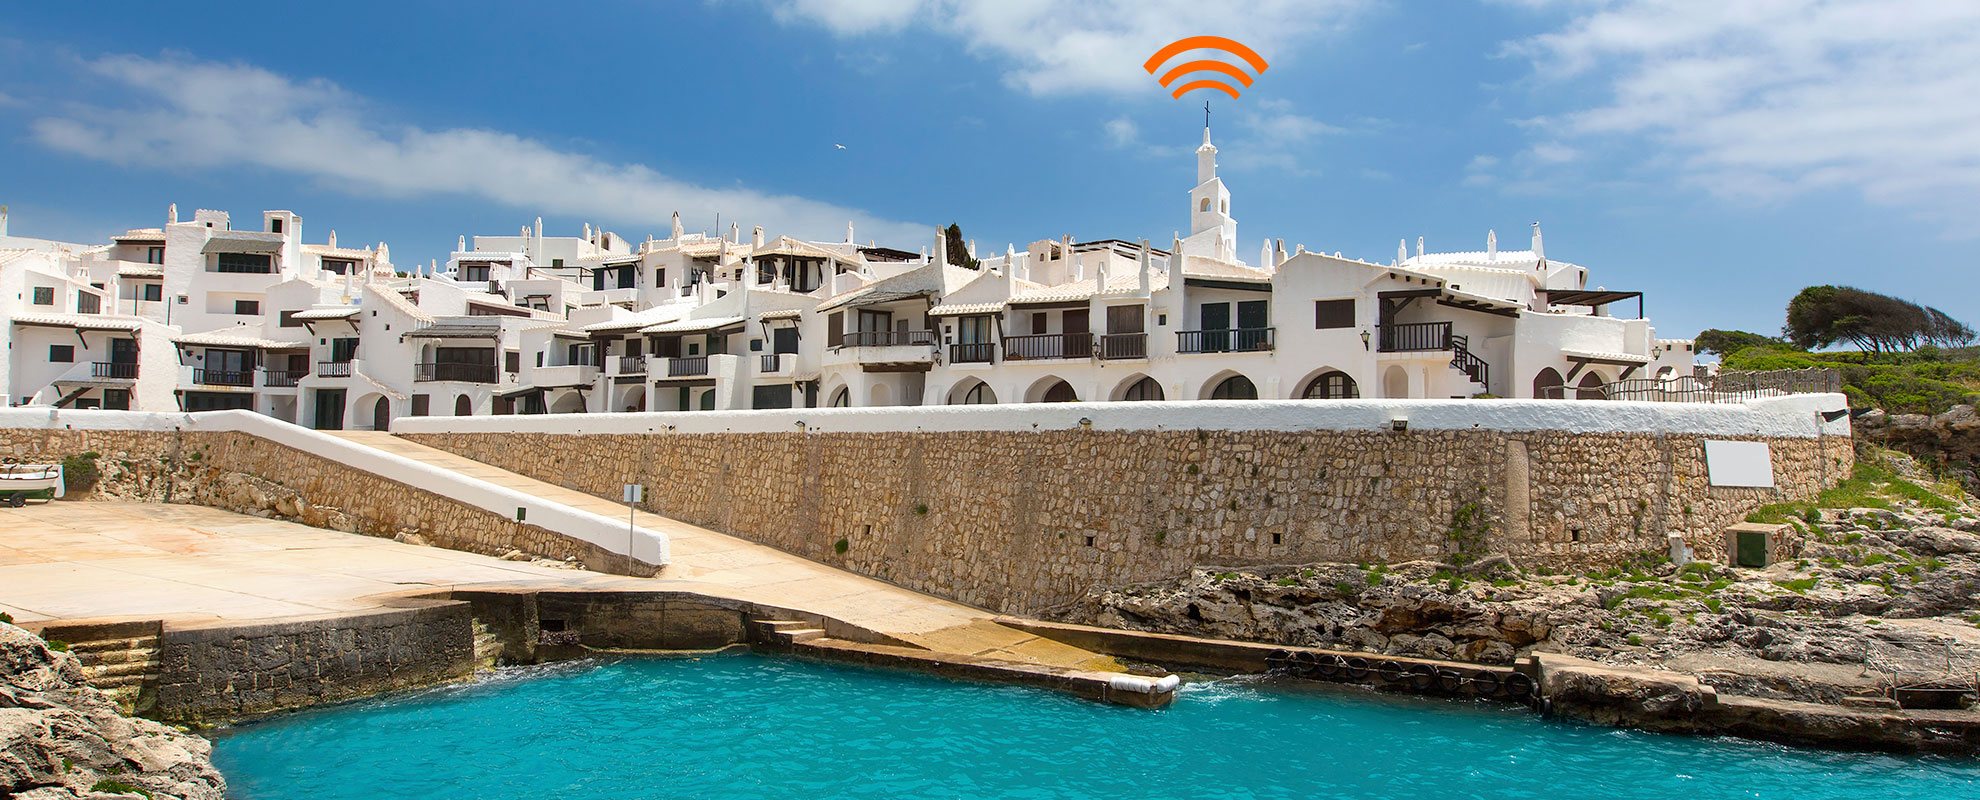 Wimax, Broadband Internet all over Menorca